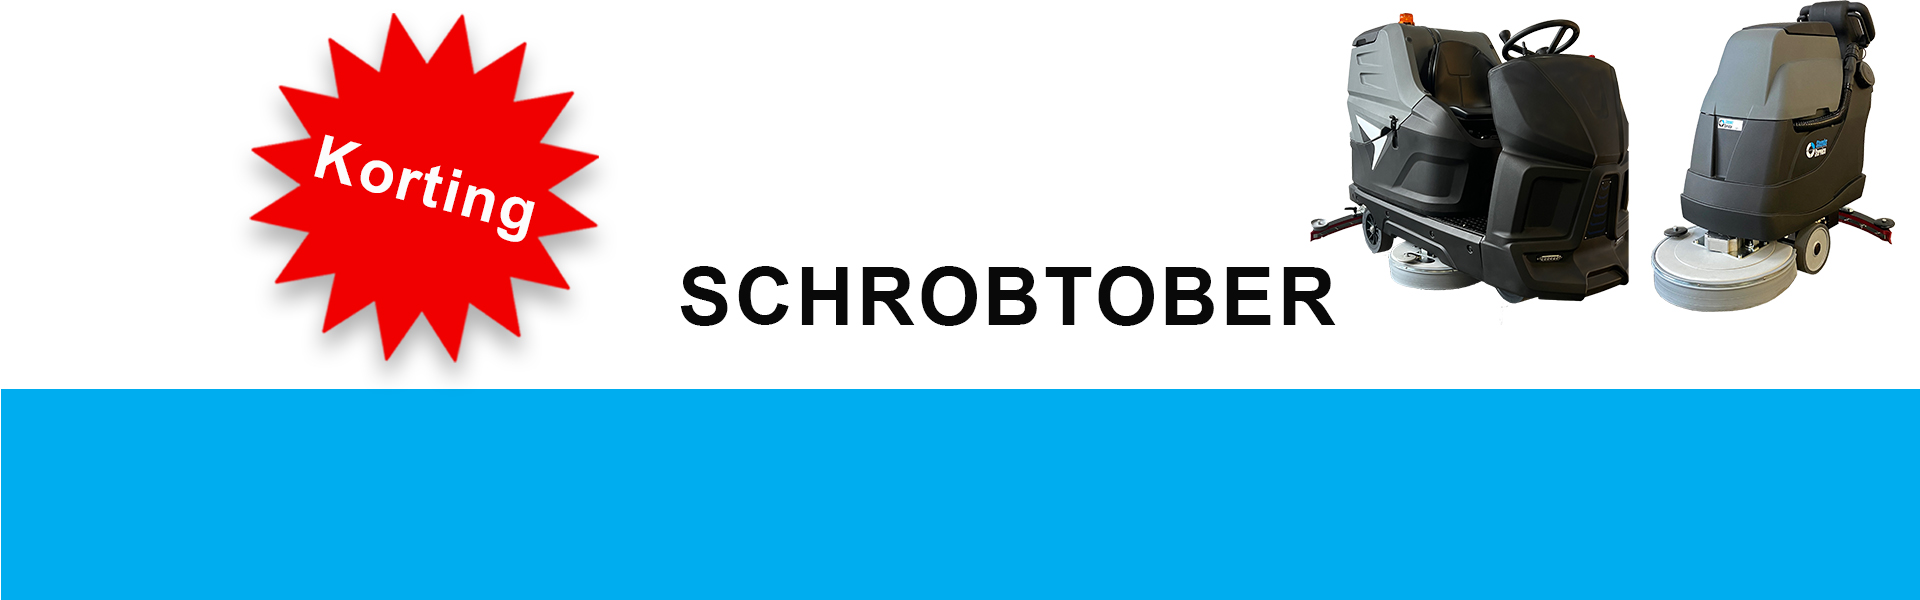 Websitebanner_schrobtober